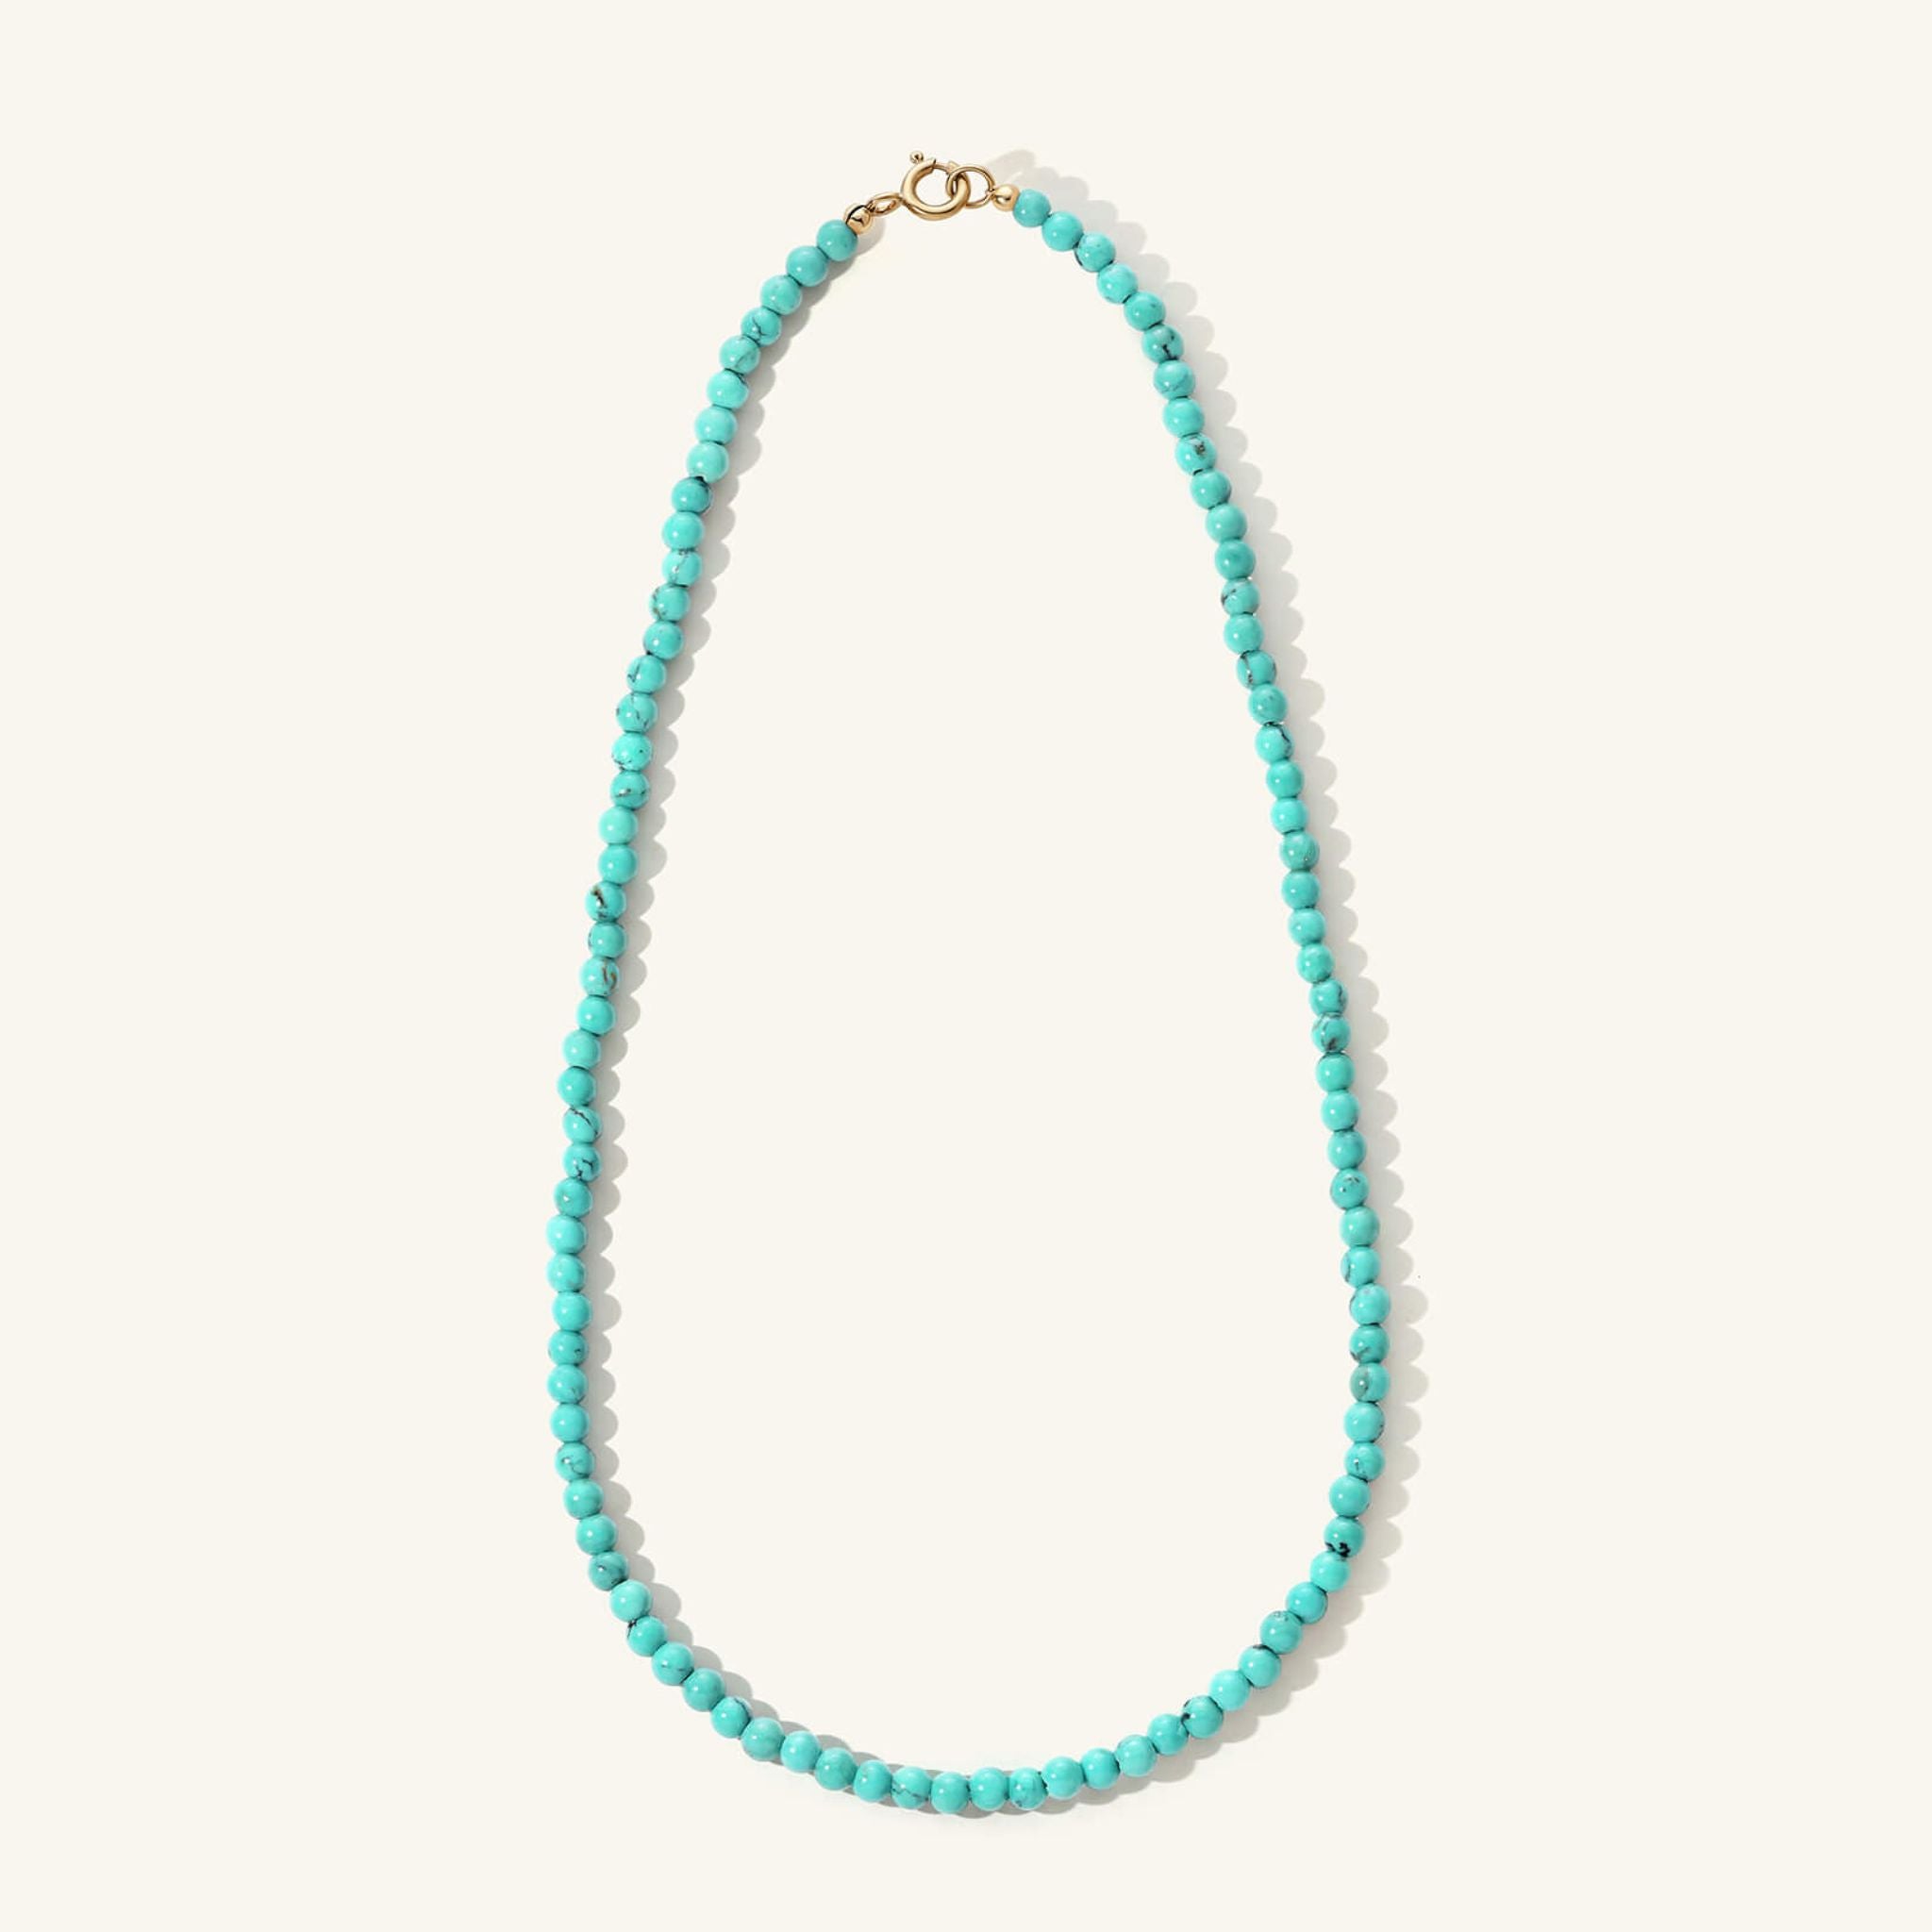 Turquoise necklace - Ibiza Left Hand Design